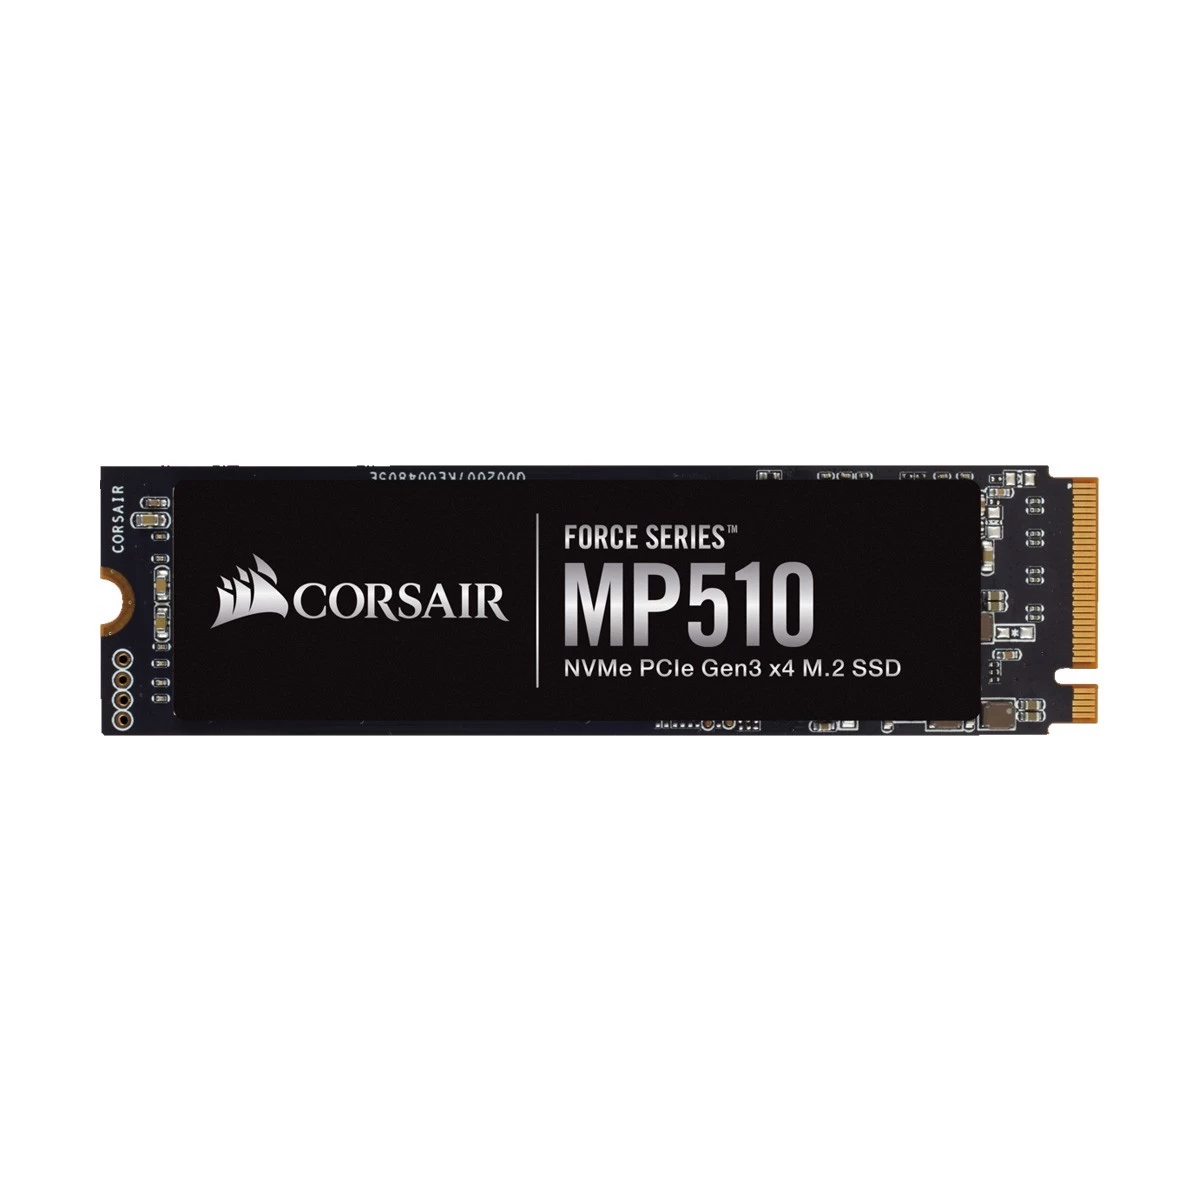 Corsair Force Series MP510 240GB M.2 2280 PCIe SSD